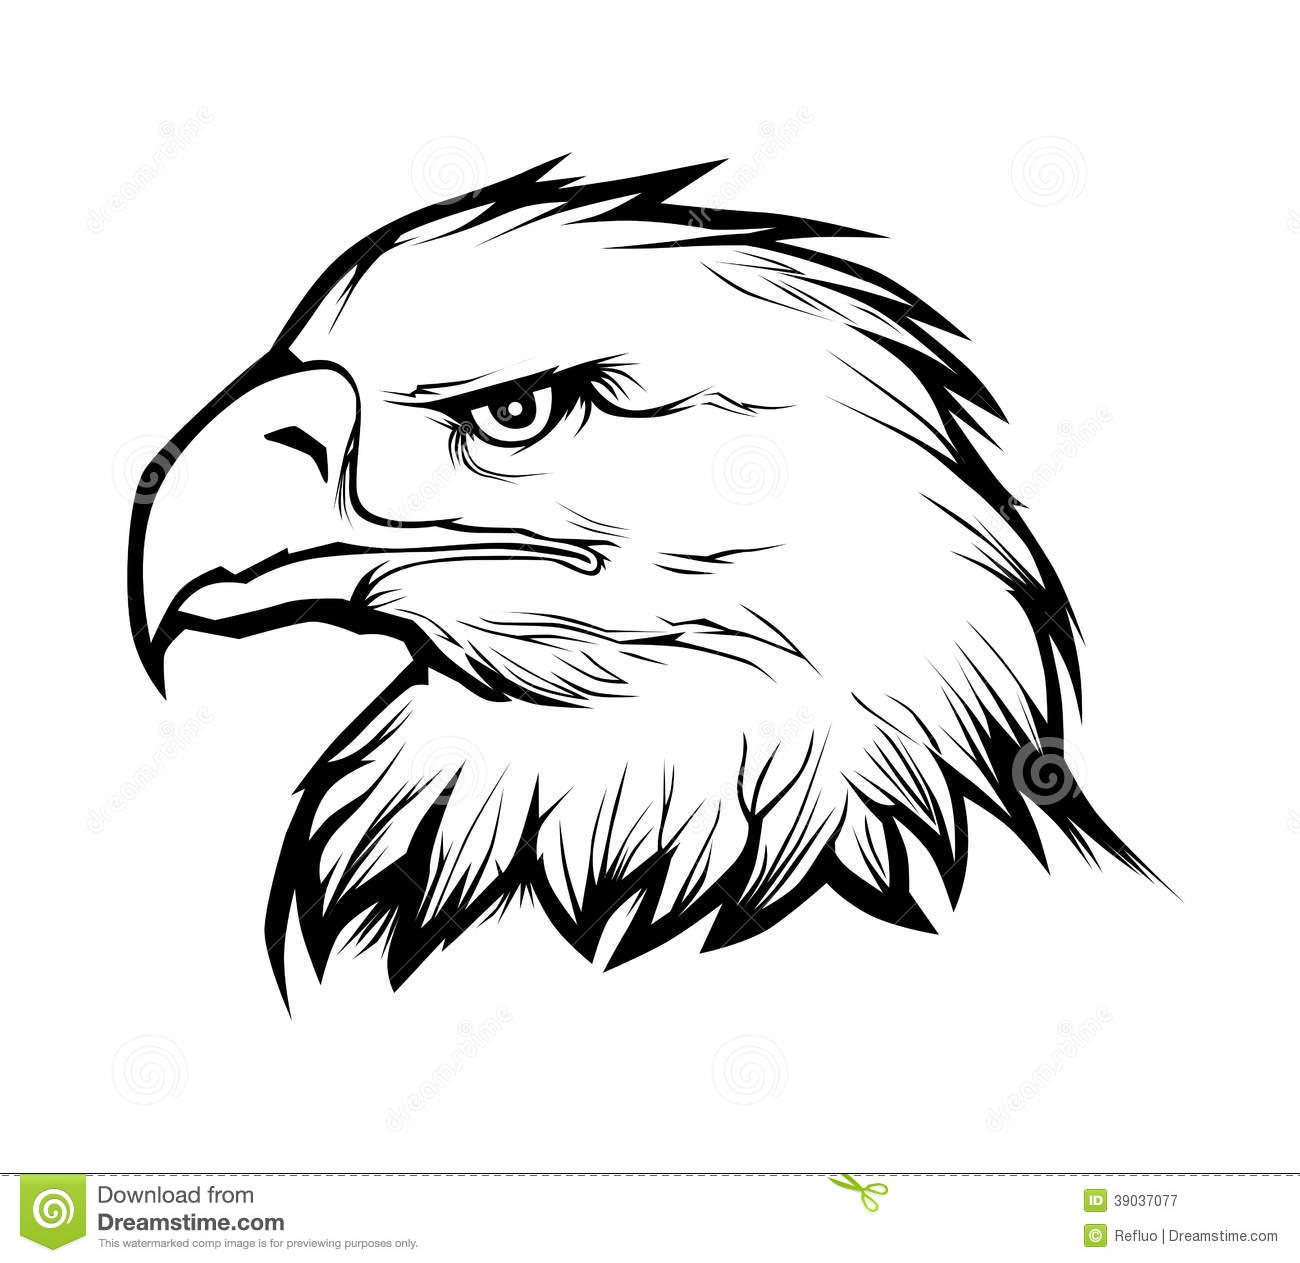 Eagle head clipart.